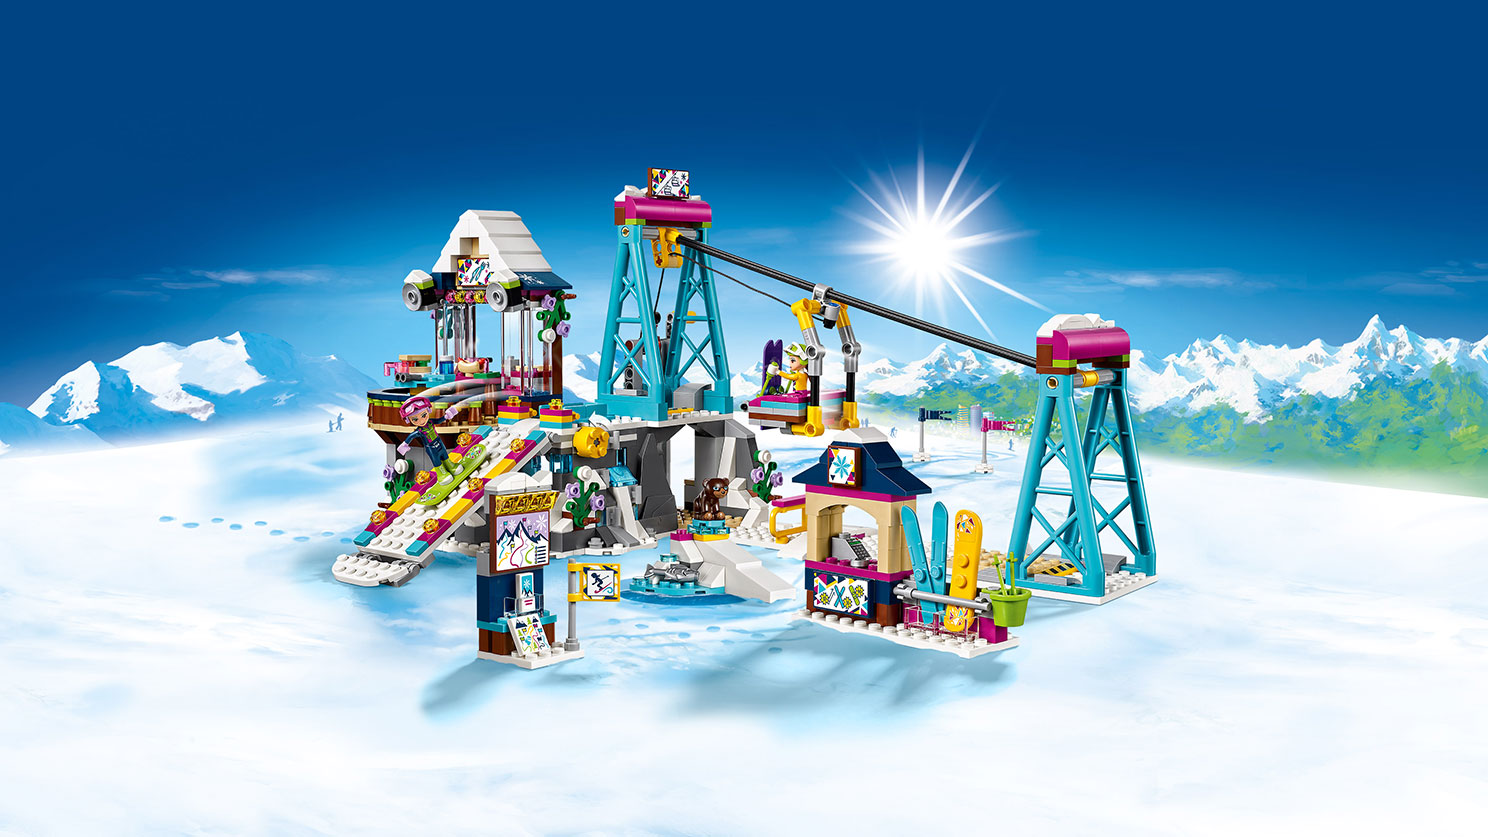 Snow Resort Ski Lift 41324 - LEGO.com kids